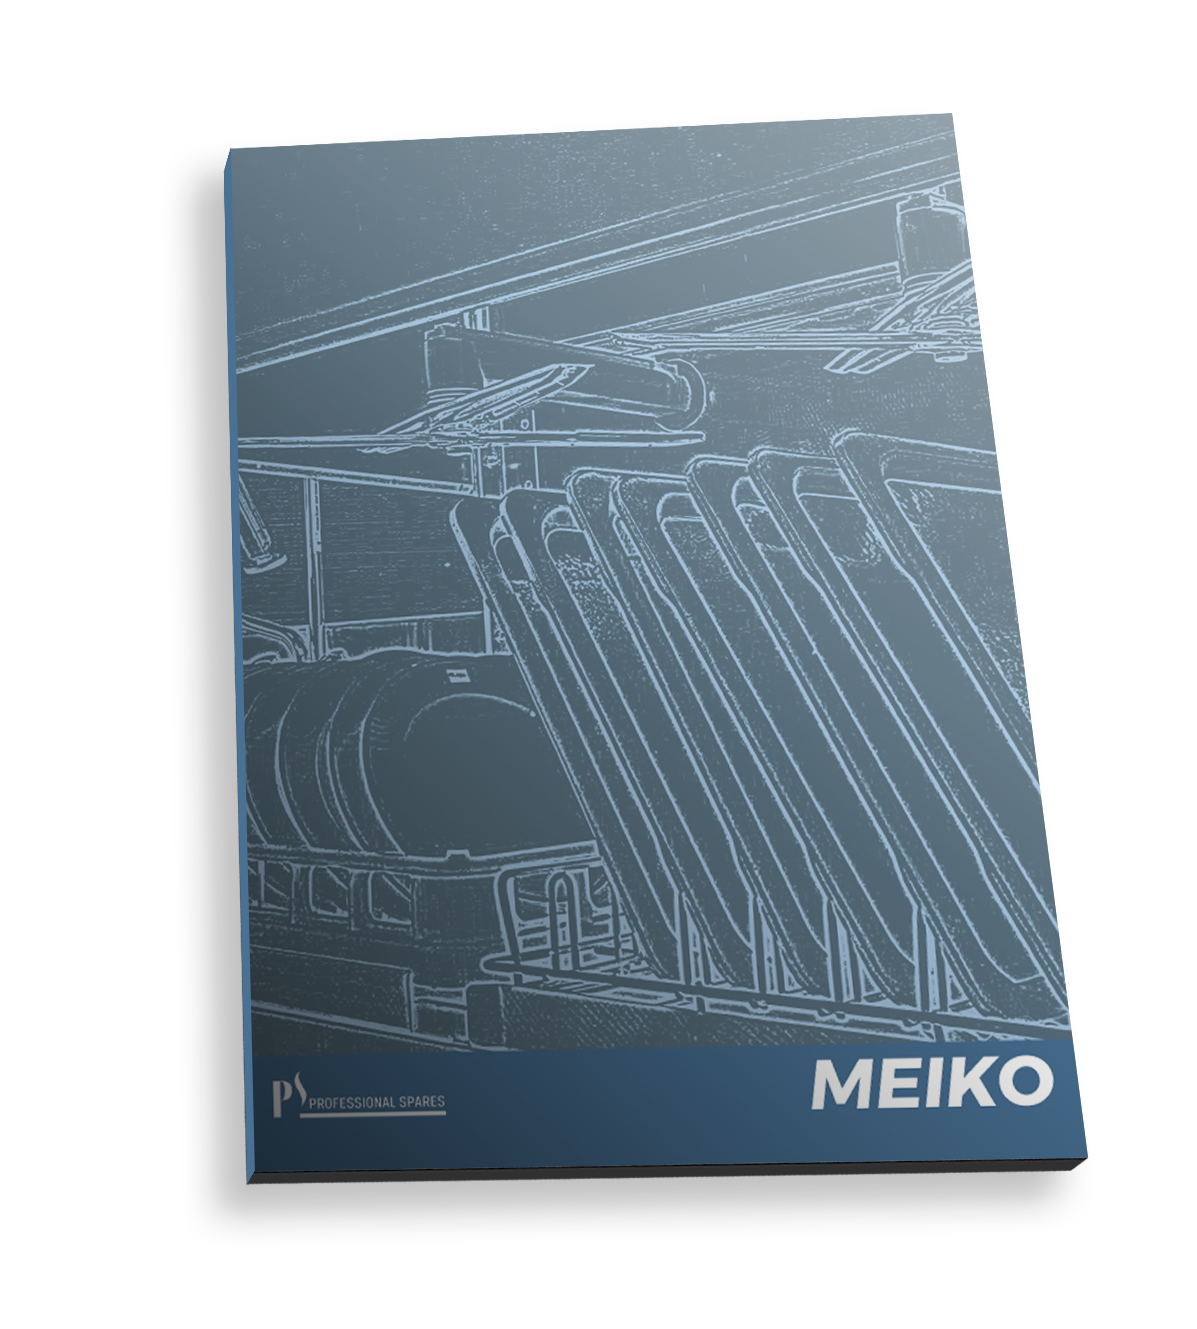 Image pdf Meiko